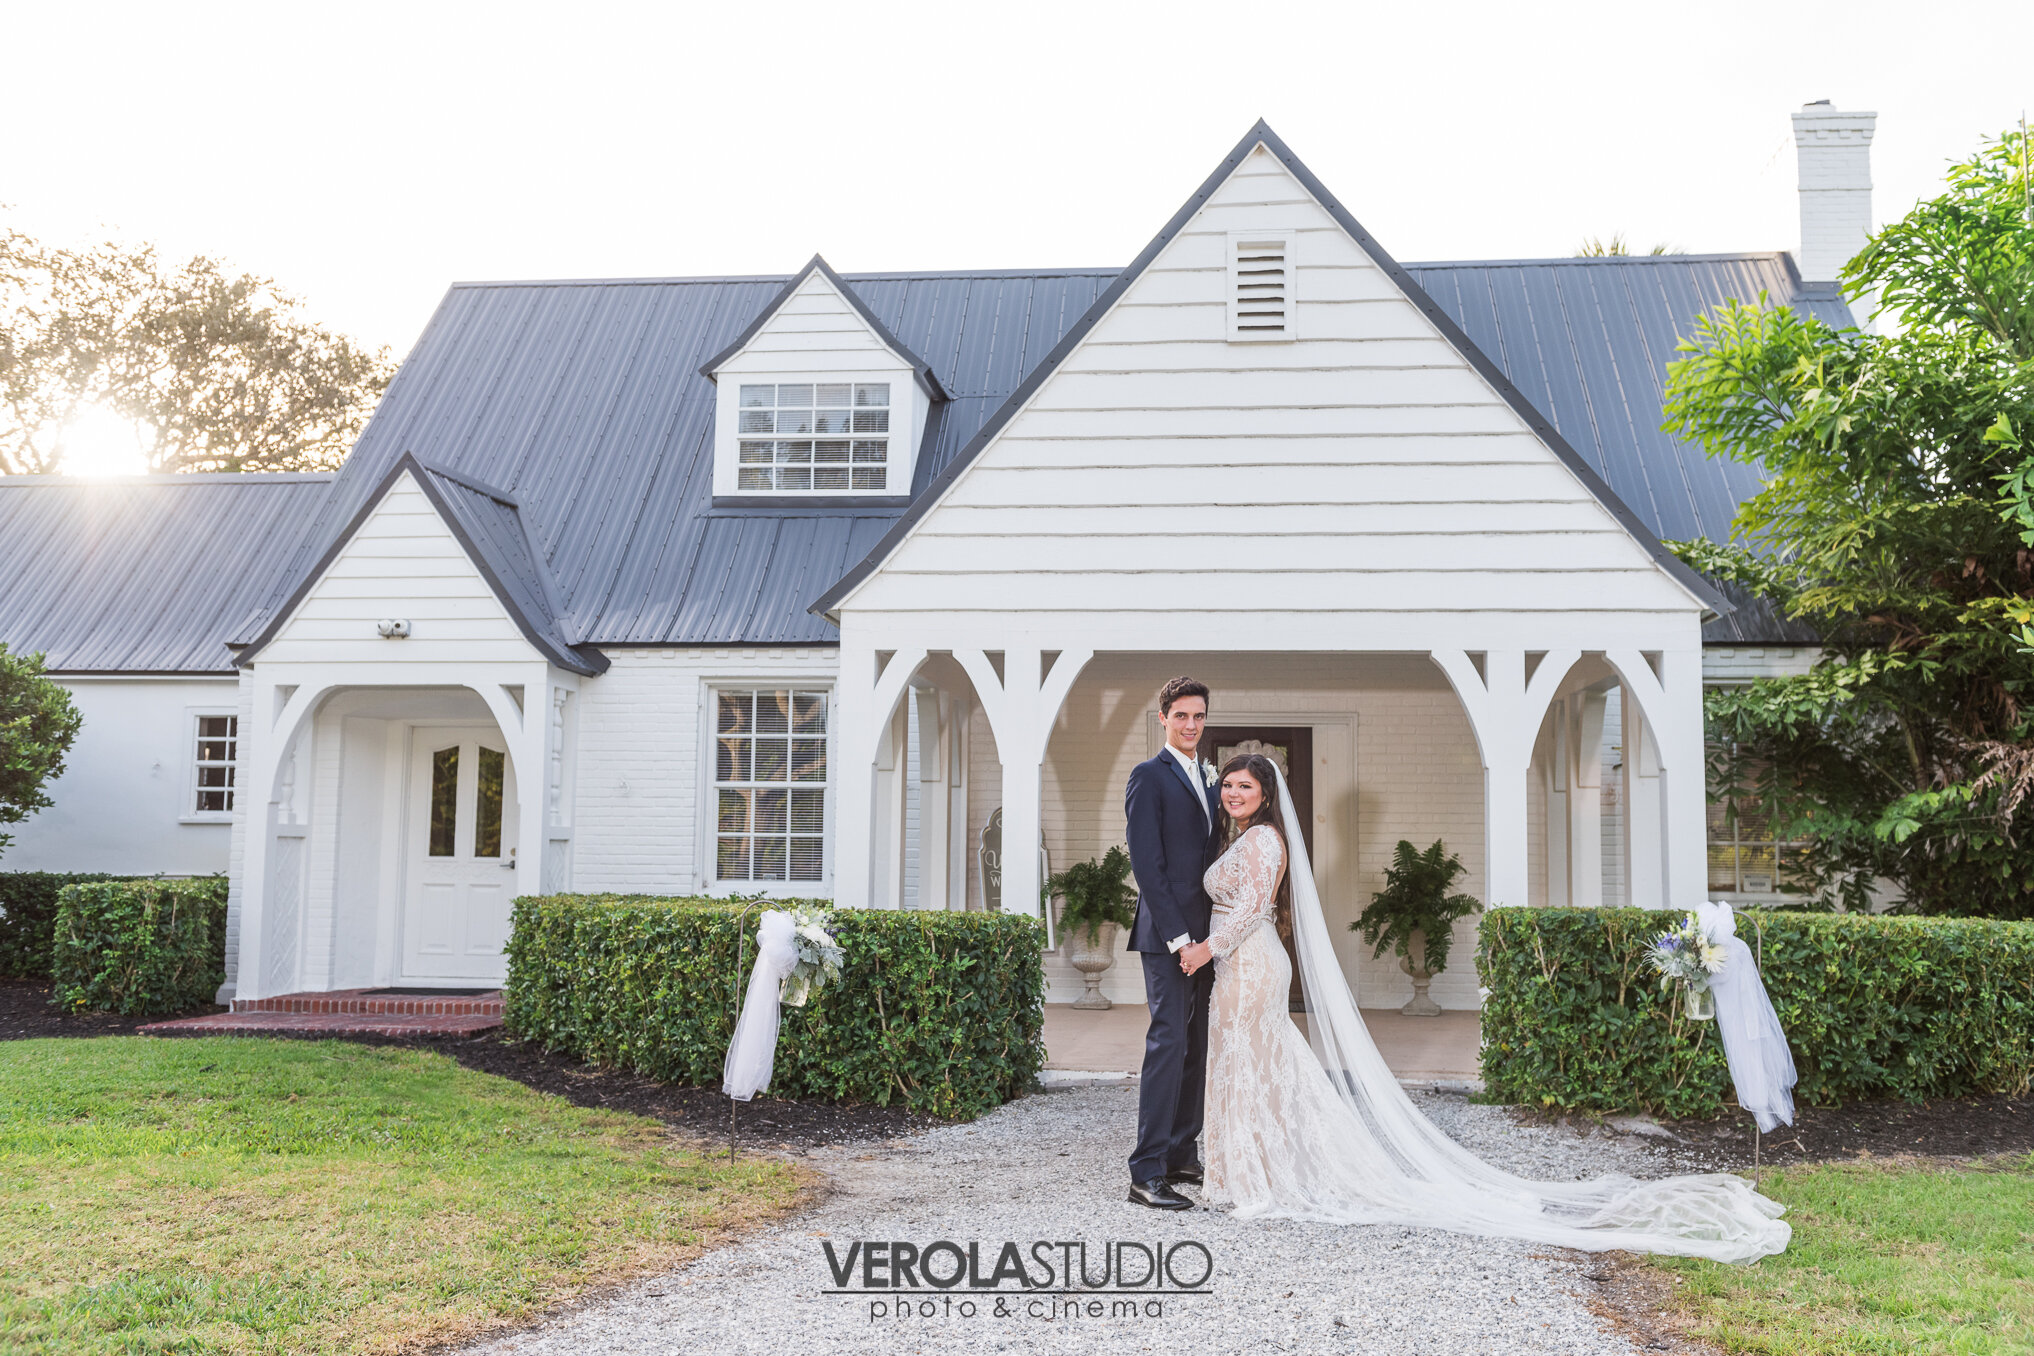 Verola Studio Lake House wedding-4.jpg